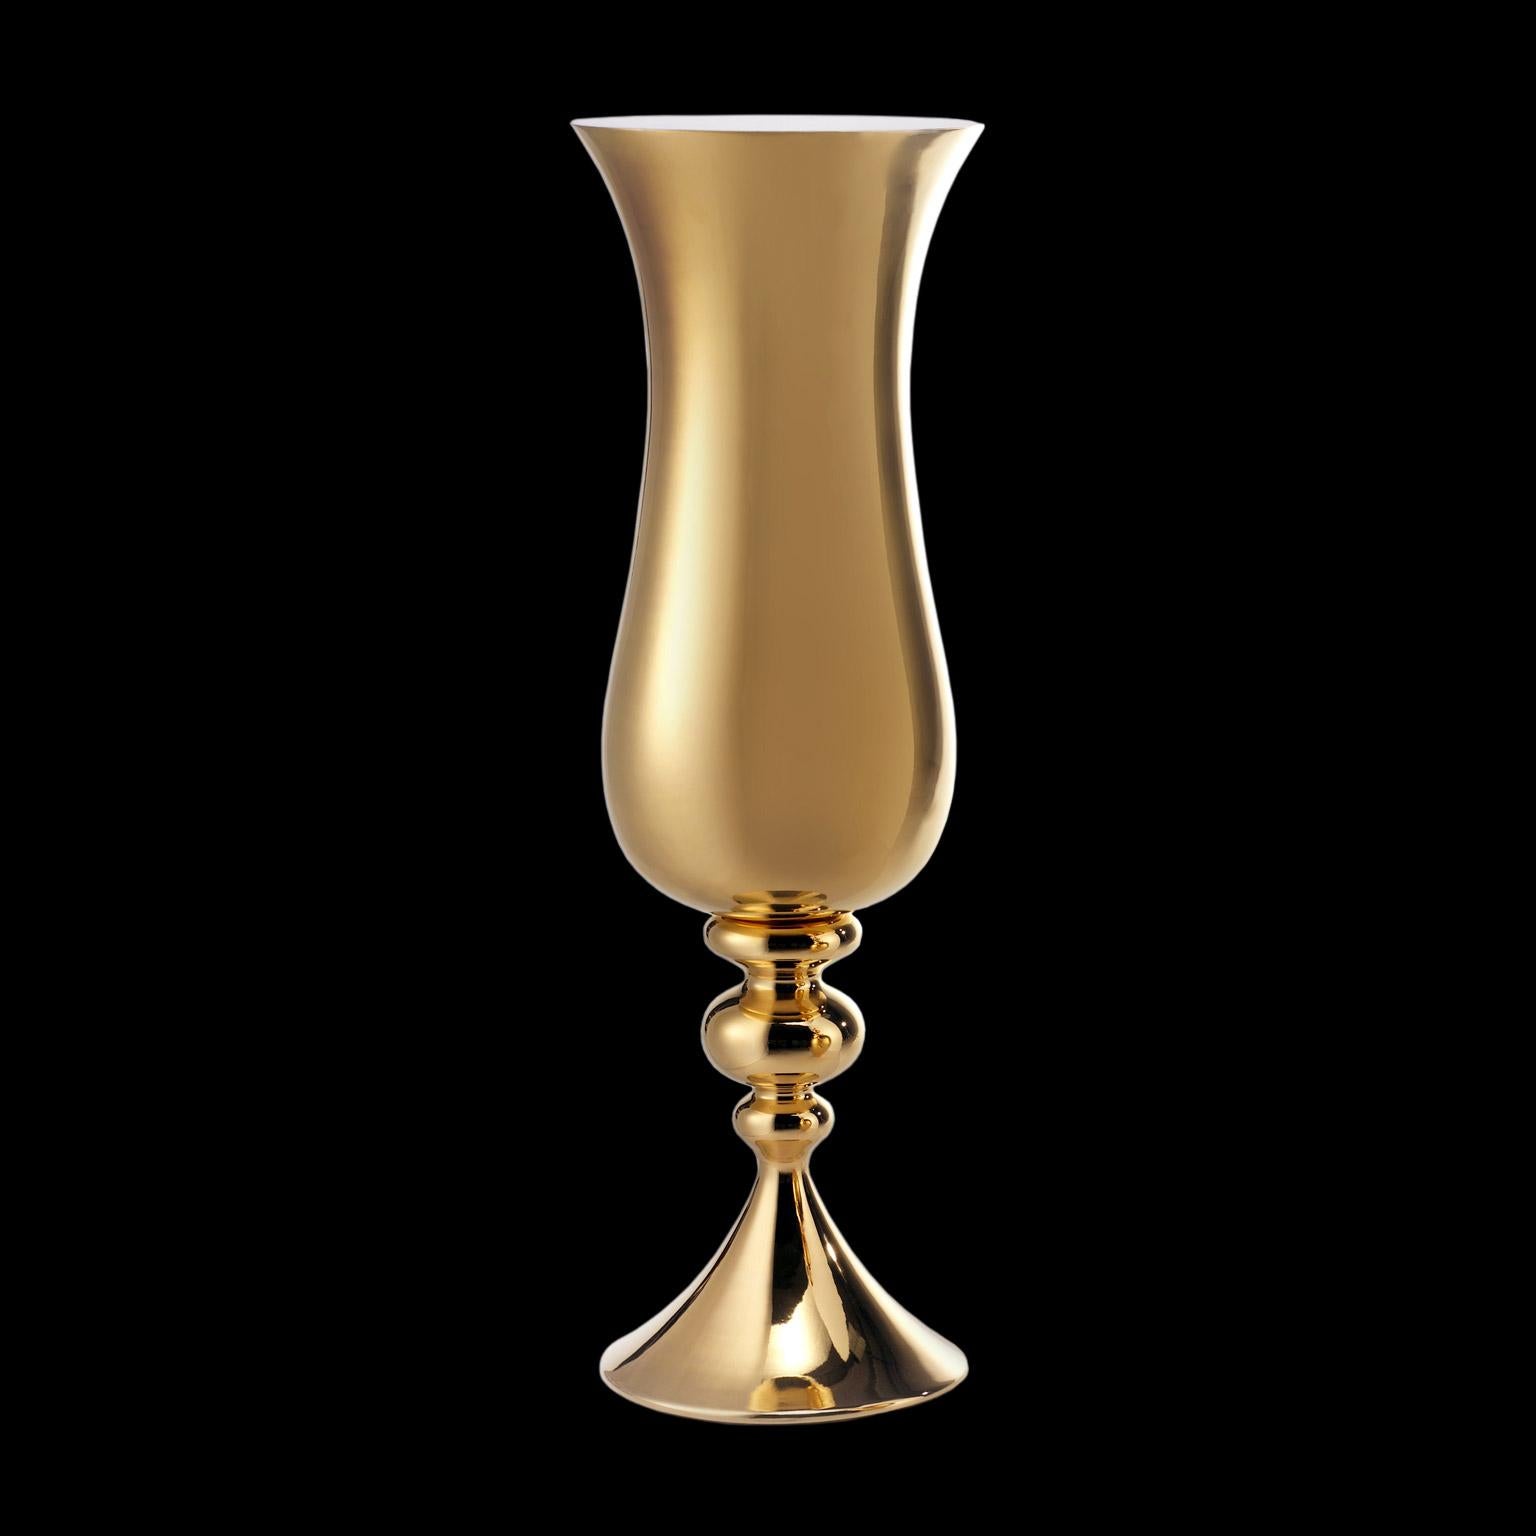 Ceramic vase LOTH
cod. CP050 
handcrafted in 24-karat gold
and white mat glazed inside  

measures: 
H. 140.0 cm.
Dm. 40.0 cm.